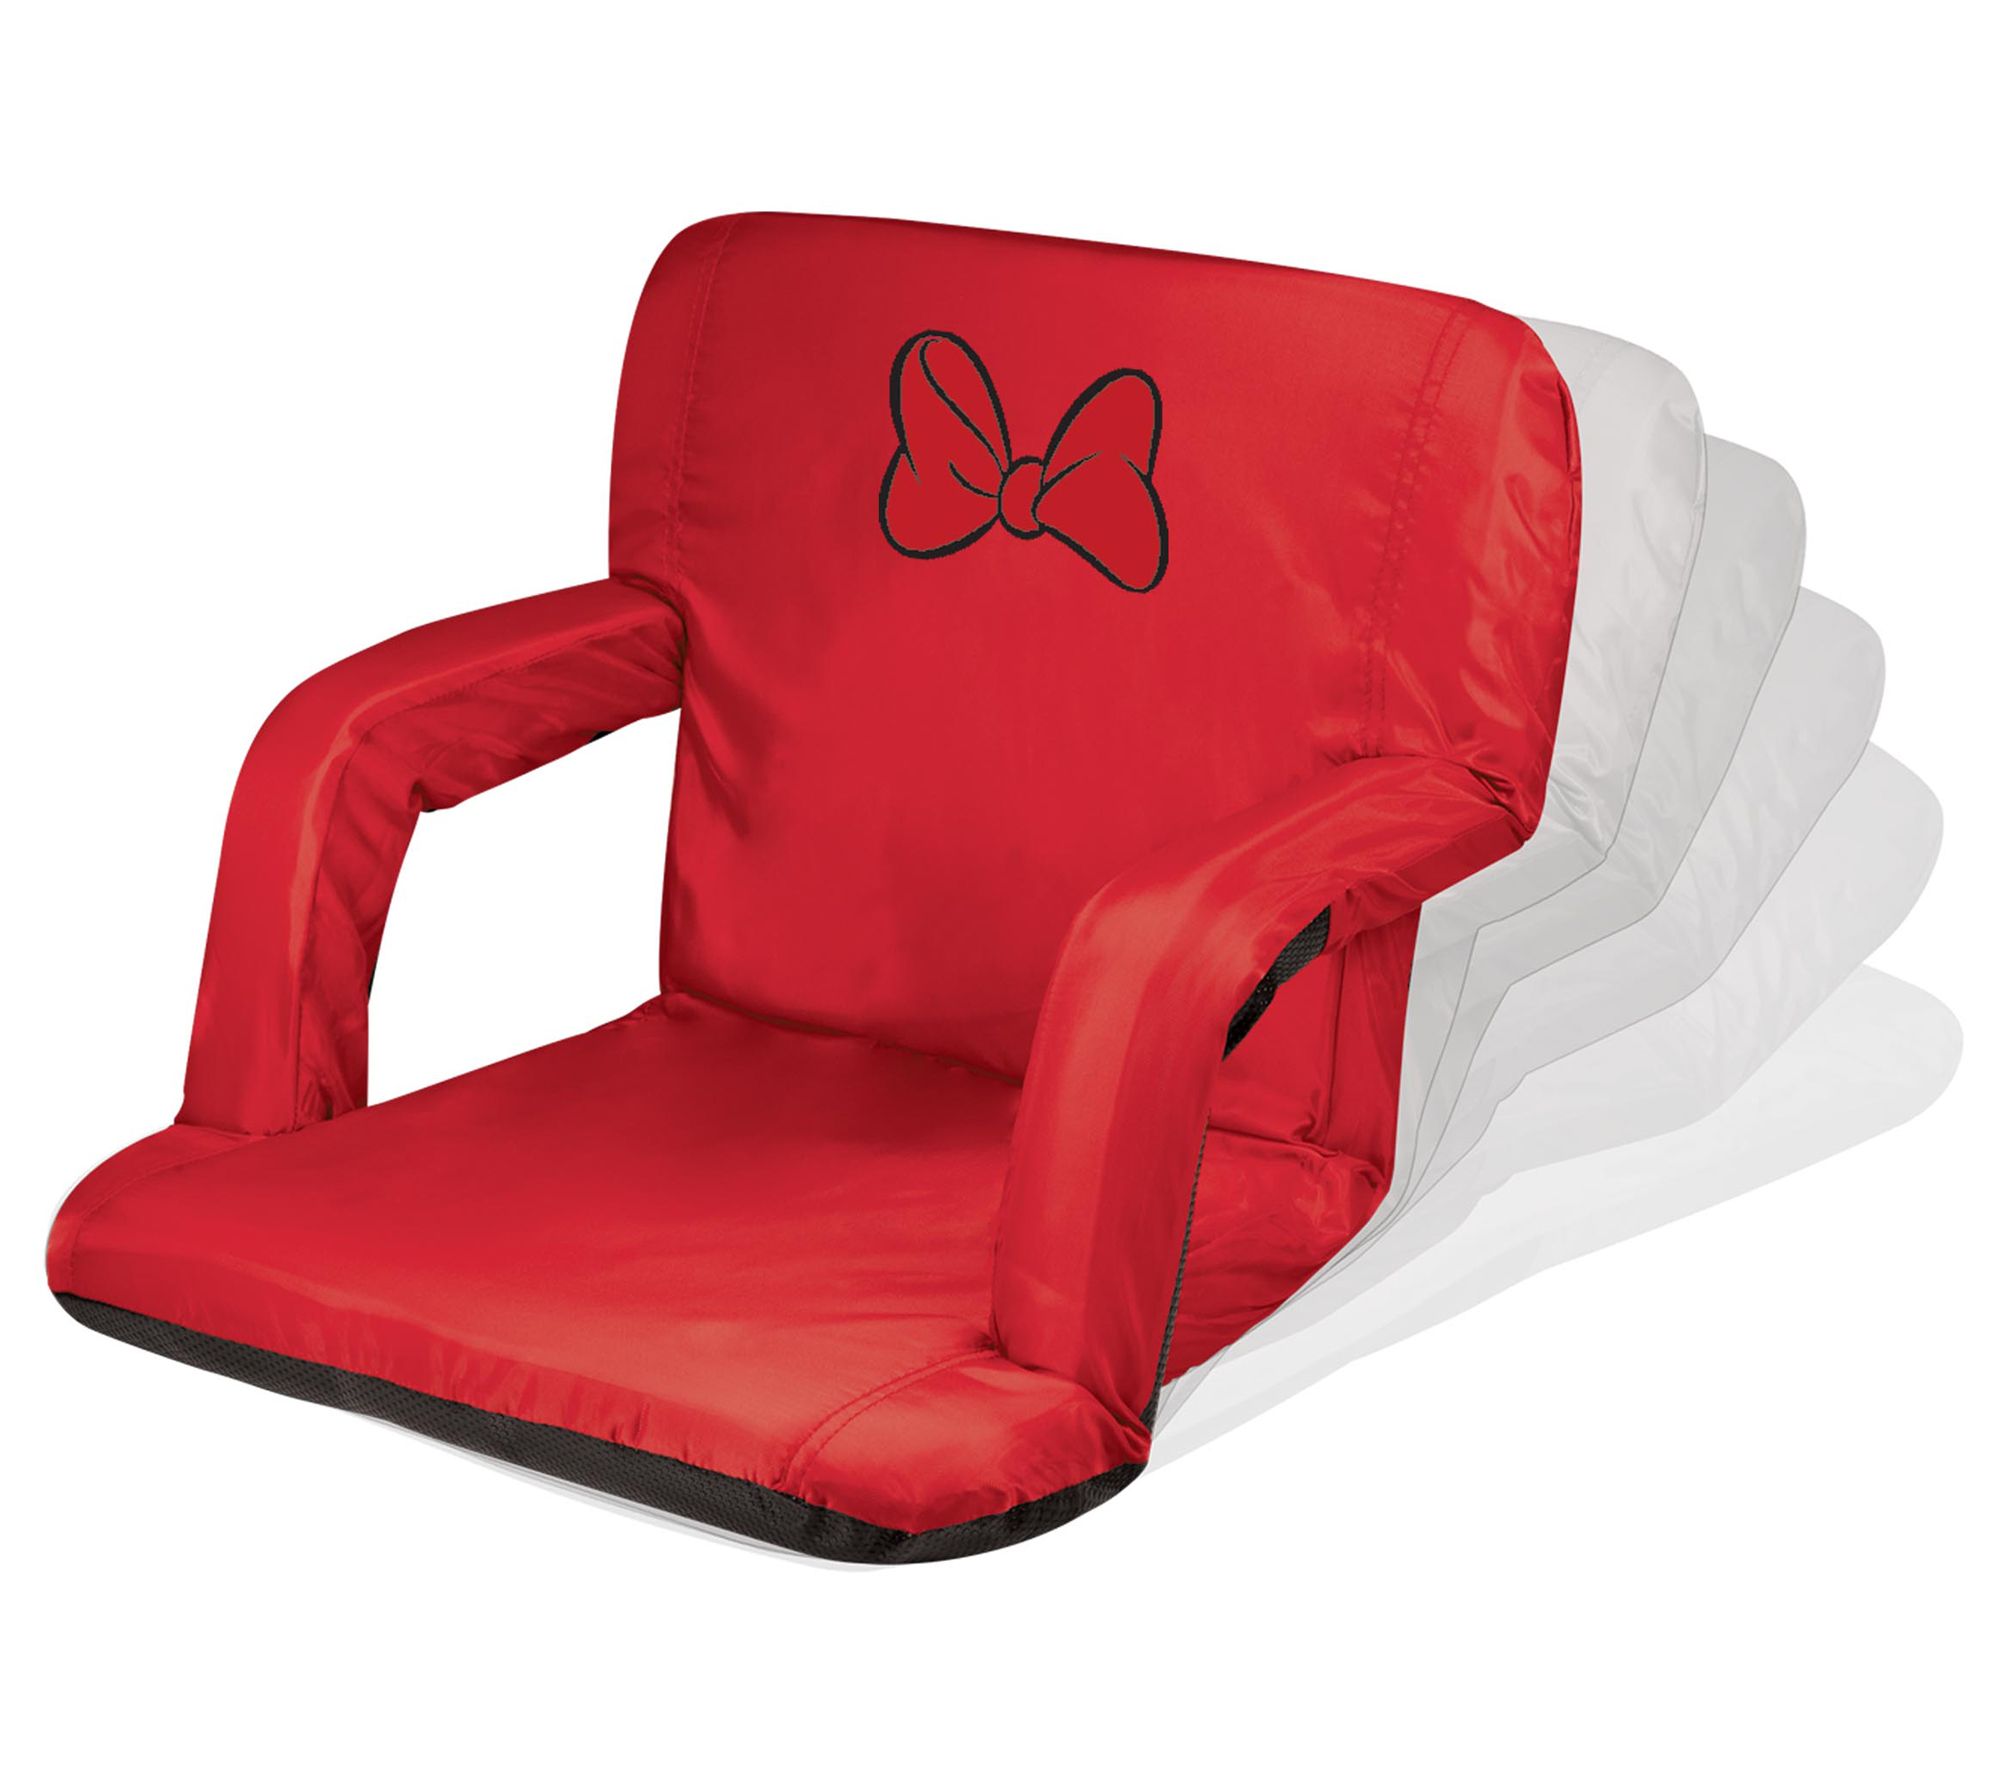 Sportneer Stadium Seats for Bleachers, Bleacher Chairs with Back